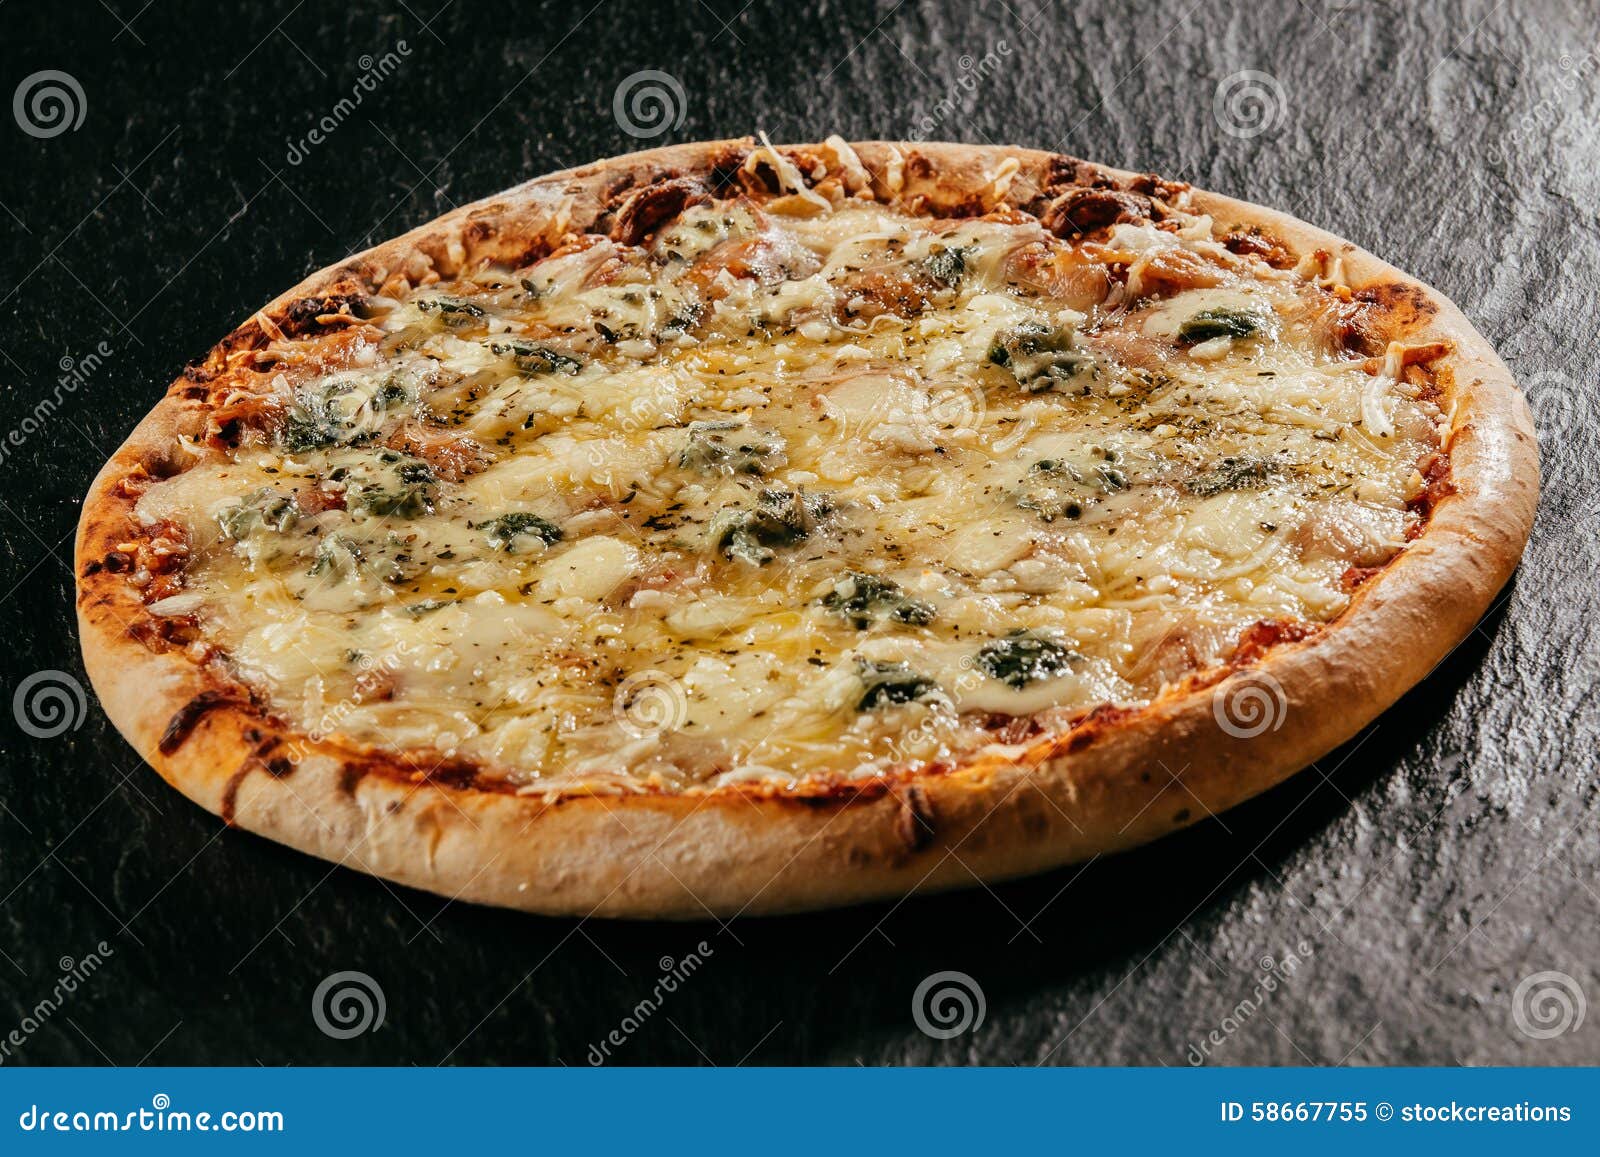 пицца trattoria четыре сыра фото 66